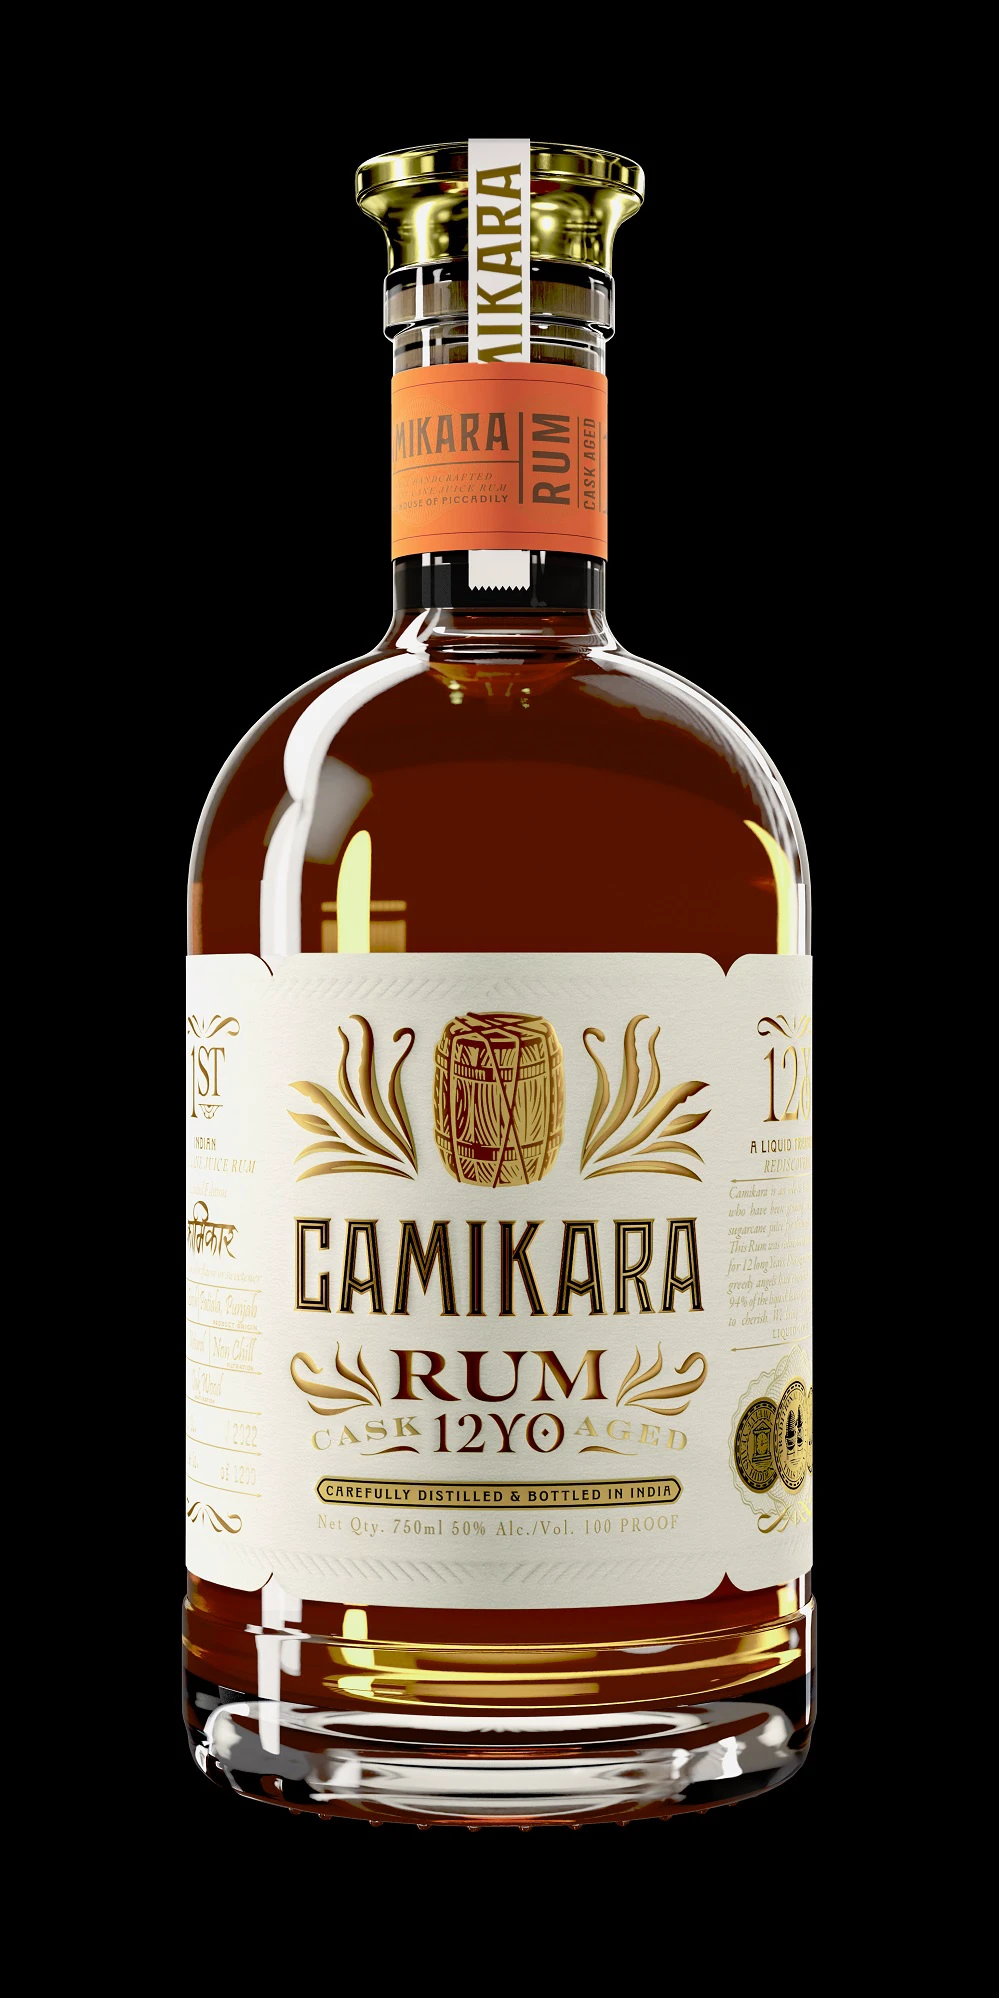 Introducing Camikara, the first Indian cane juice rum